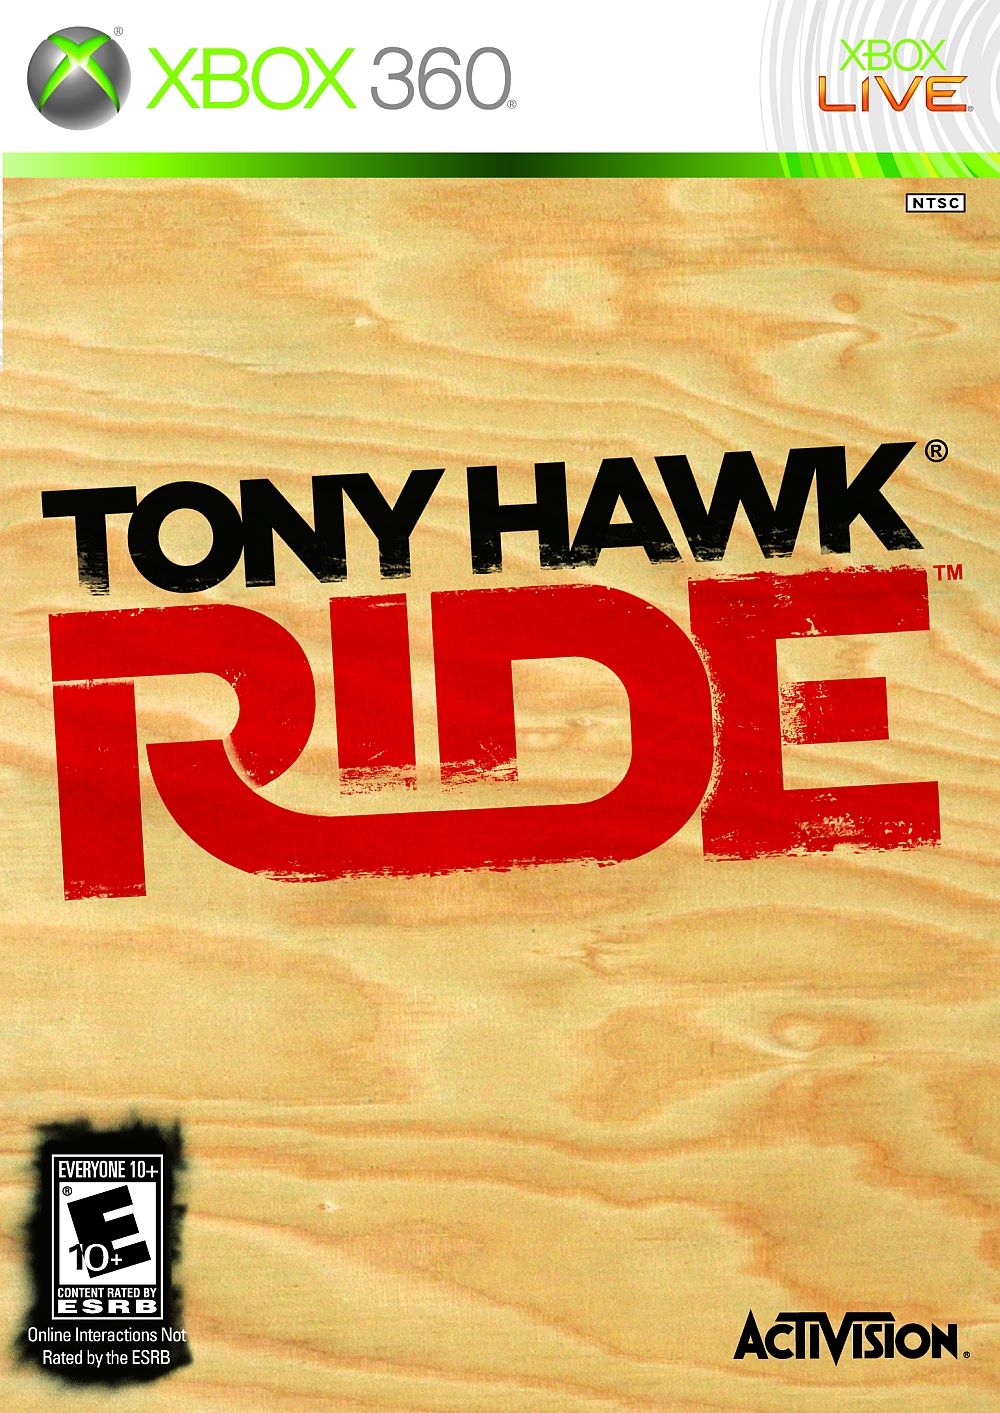 Tony Hawk: Ride player count stats